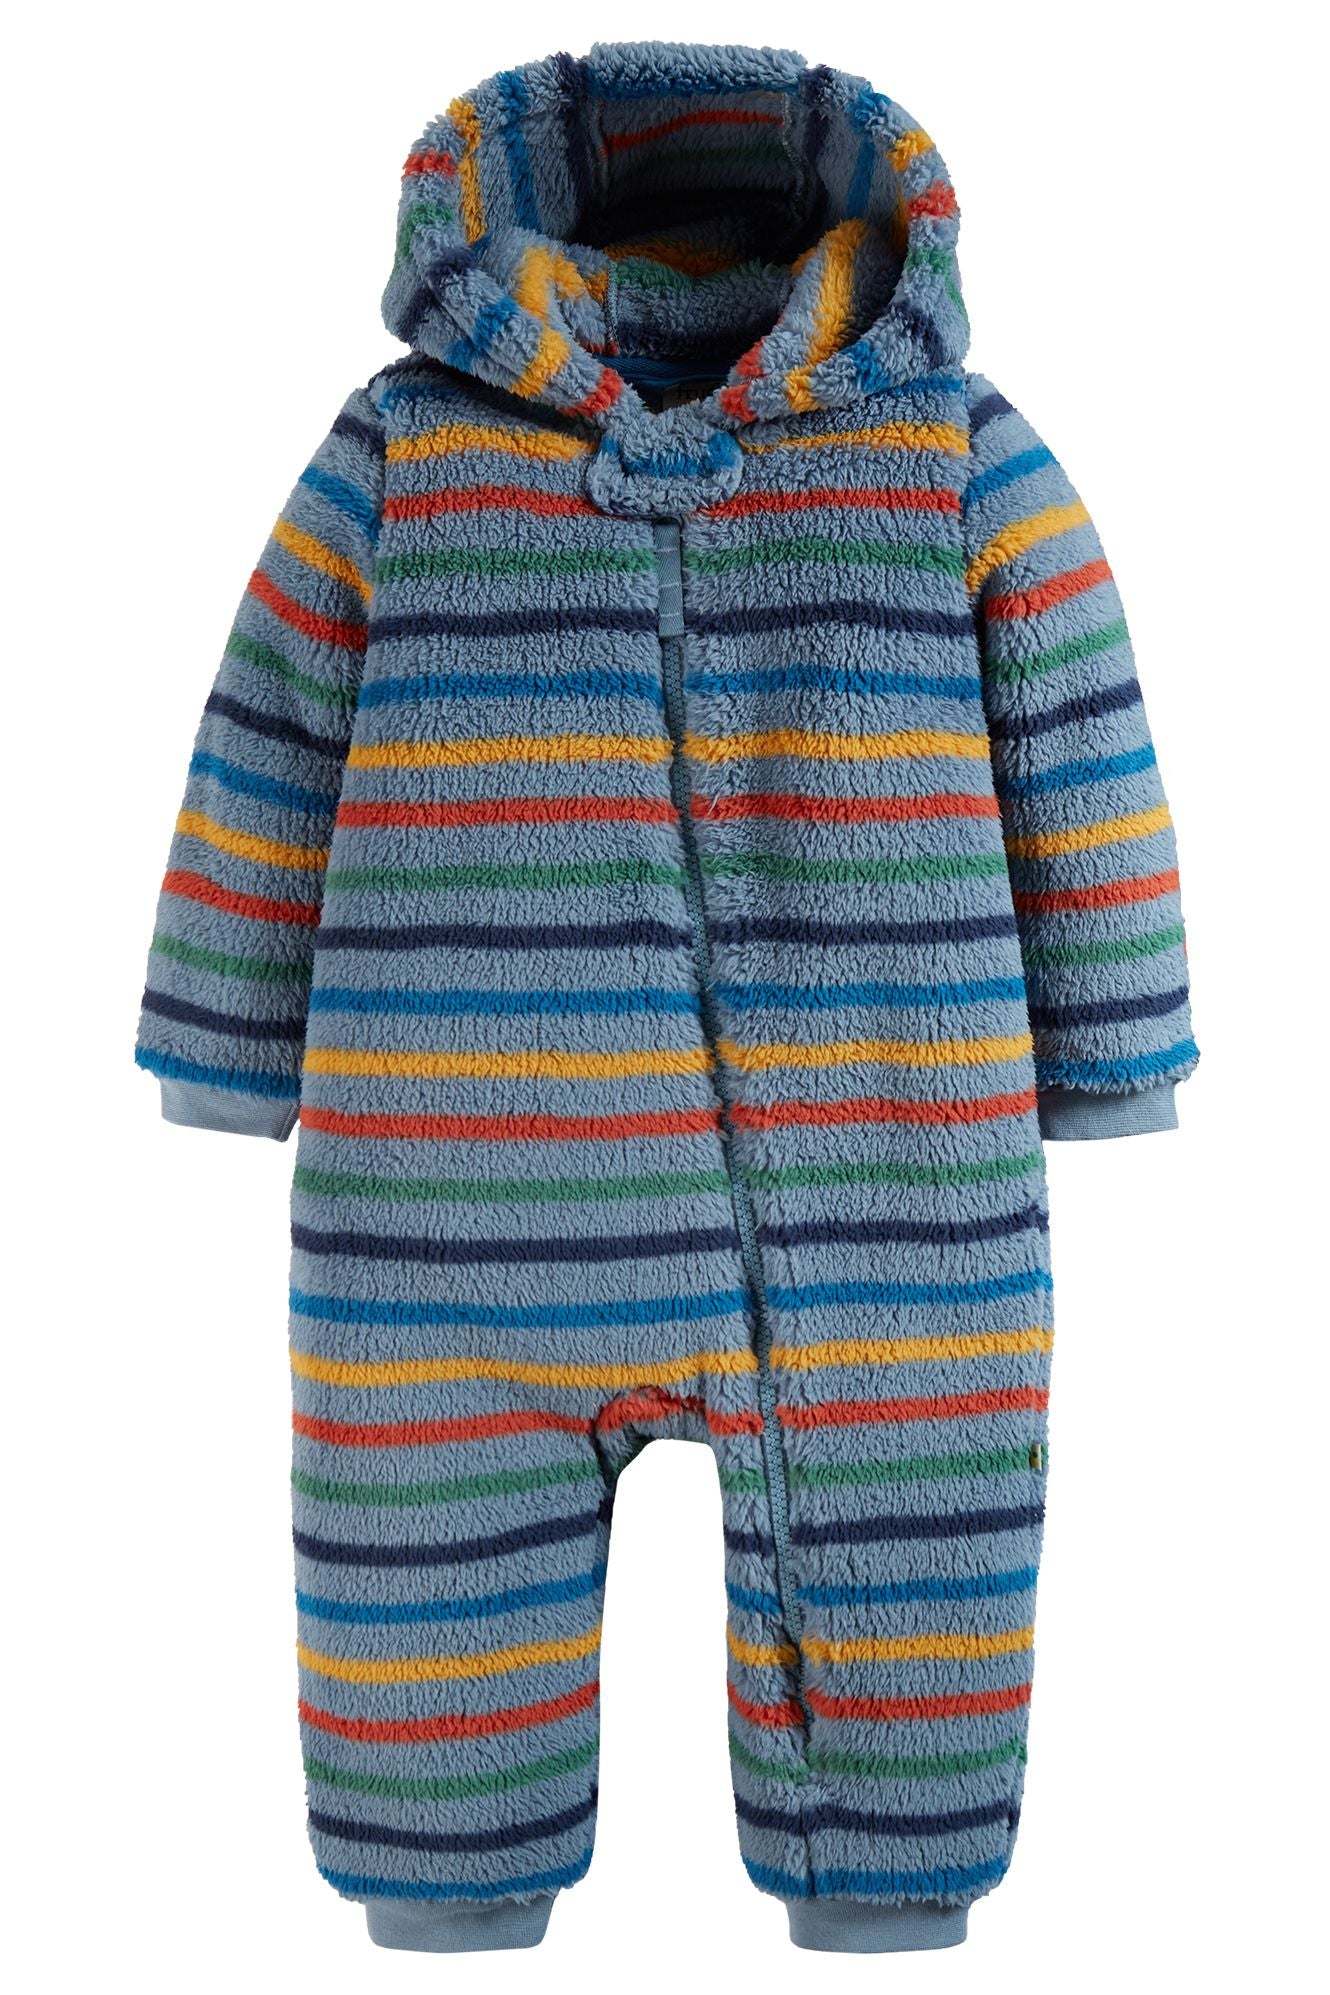 Frugi Cosy Ted Fleece Snuggle Suit Nimbus Rainbow Stripe